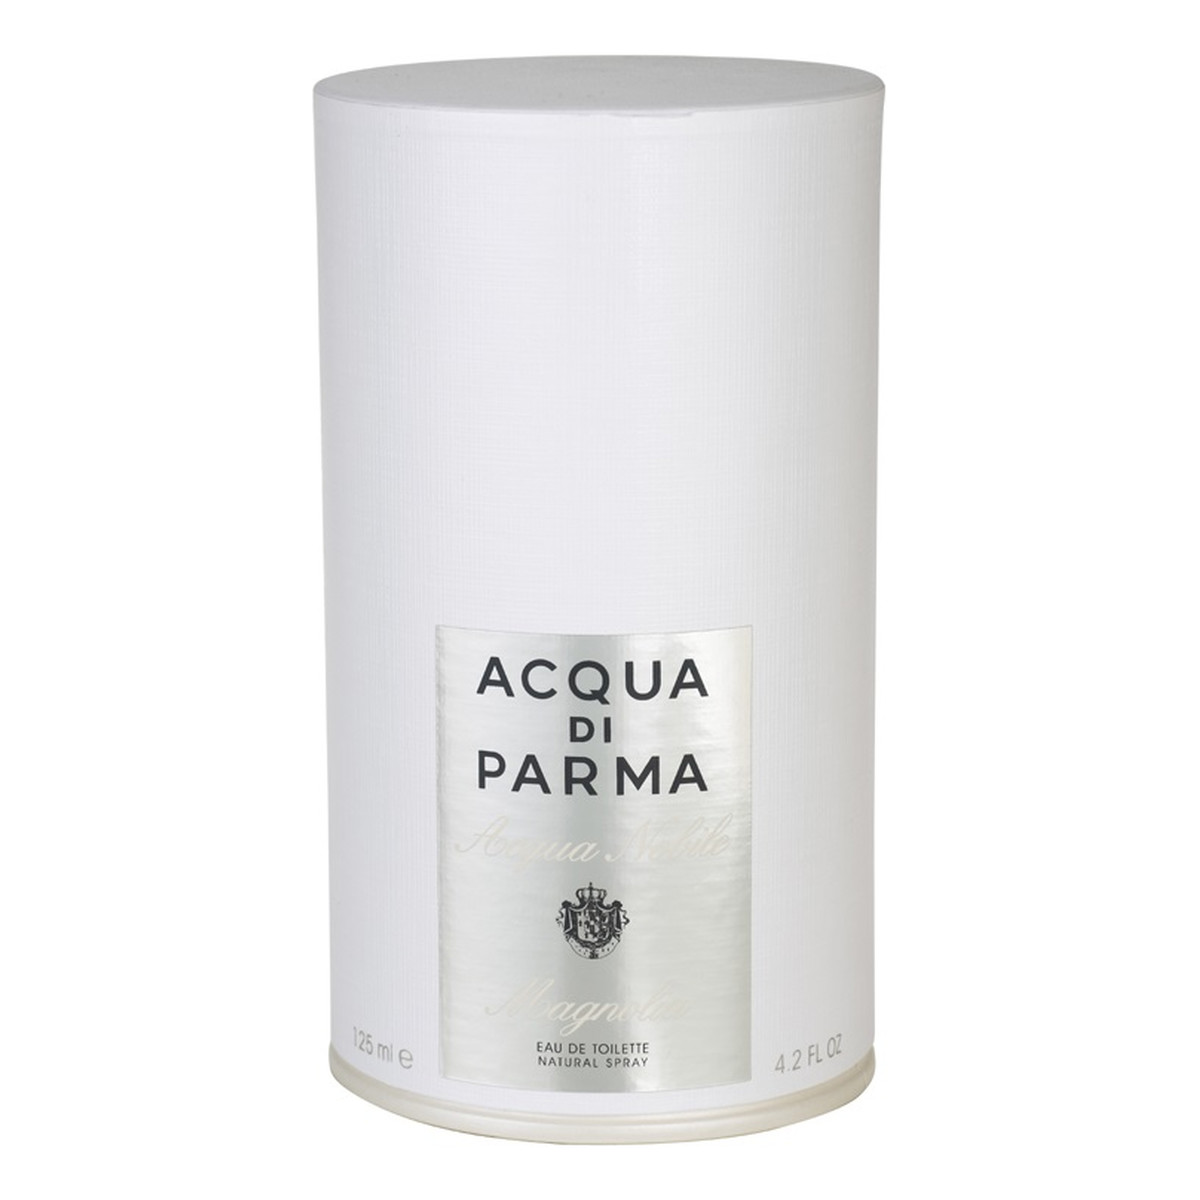 Acqua Di Parma Acqua Nobile Magnolia woda toaletowa dla kobiet 125ml